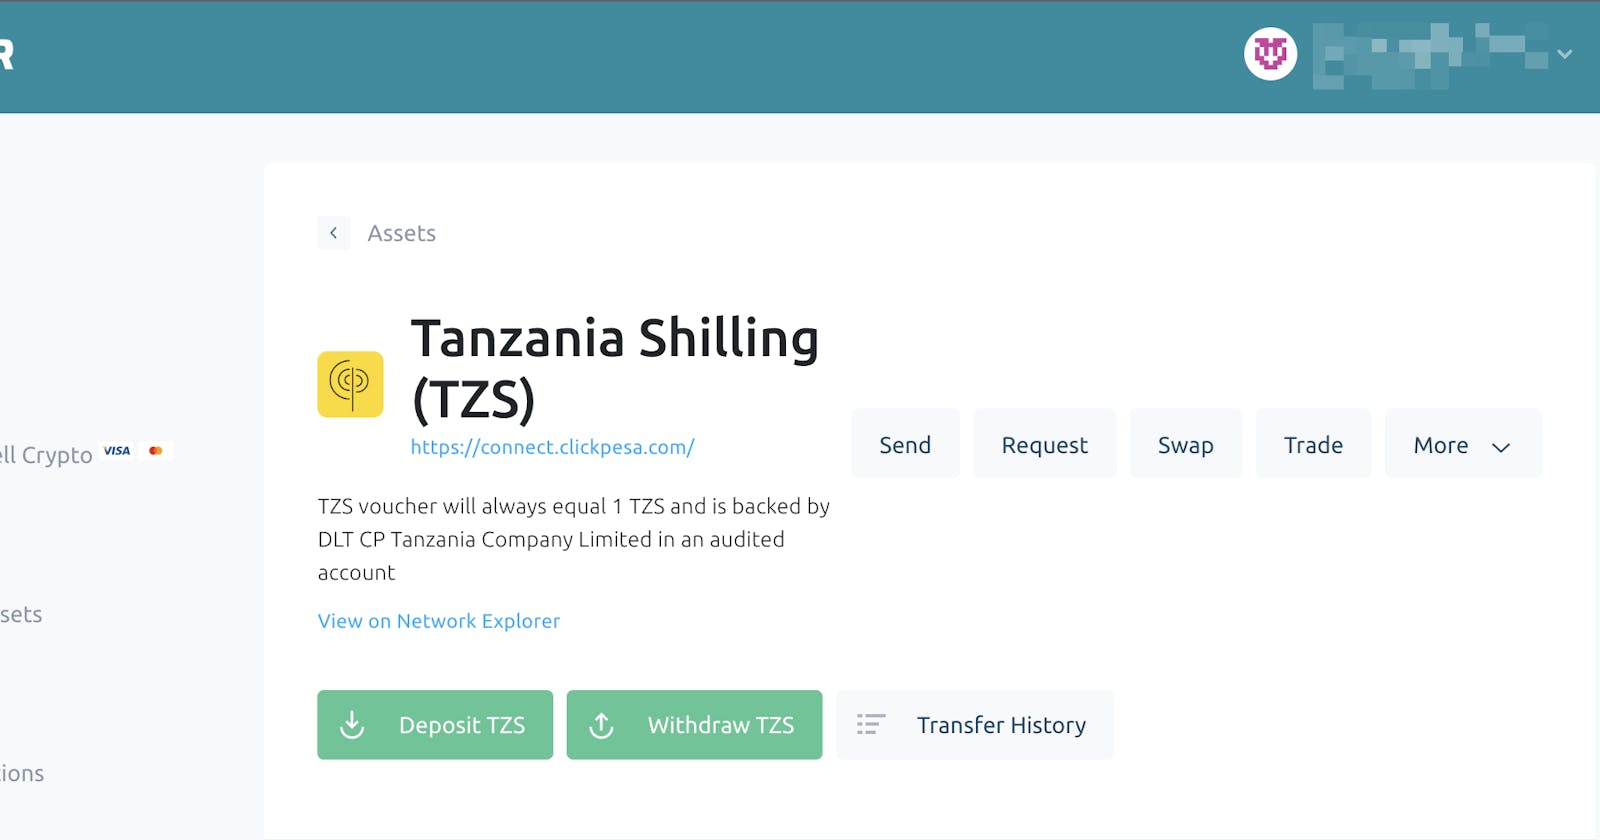 Receive TZS asset into your Stellar account via LOBSTR wallet